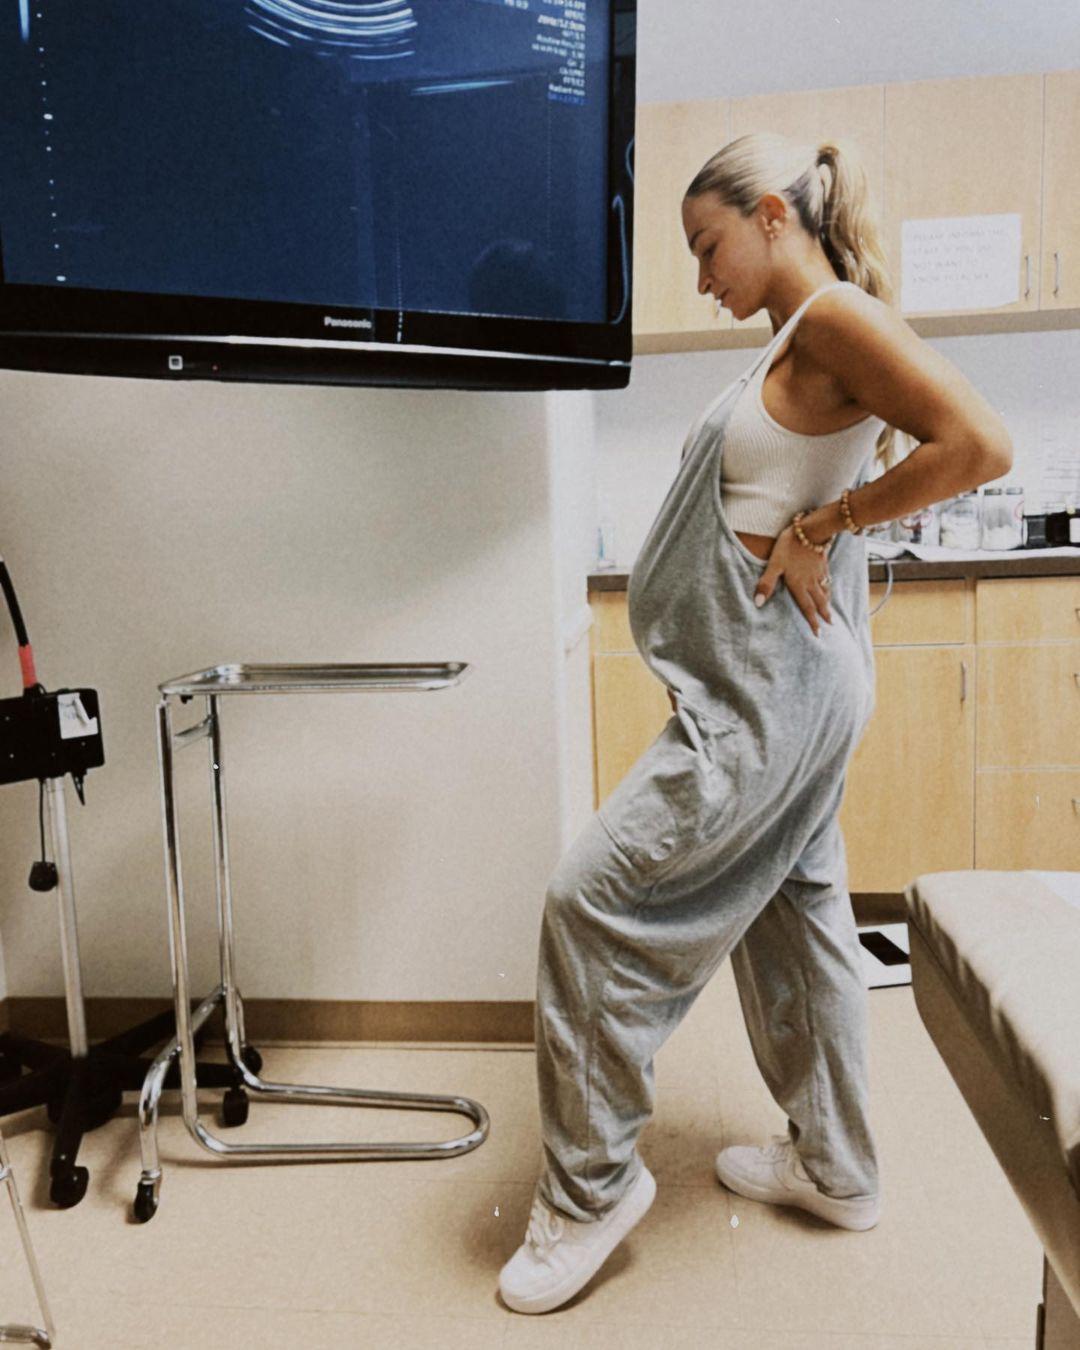 Daniella Karagach Shares 'Final Stretch' Of Pregnancy Pic